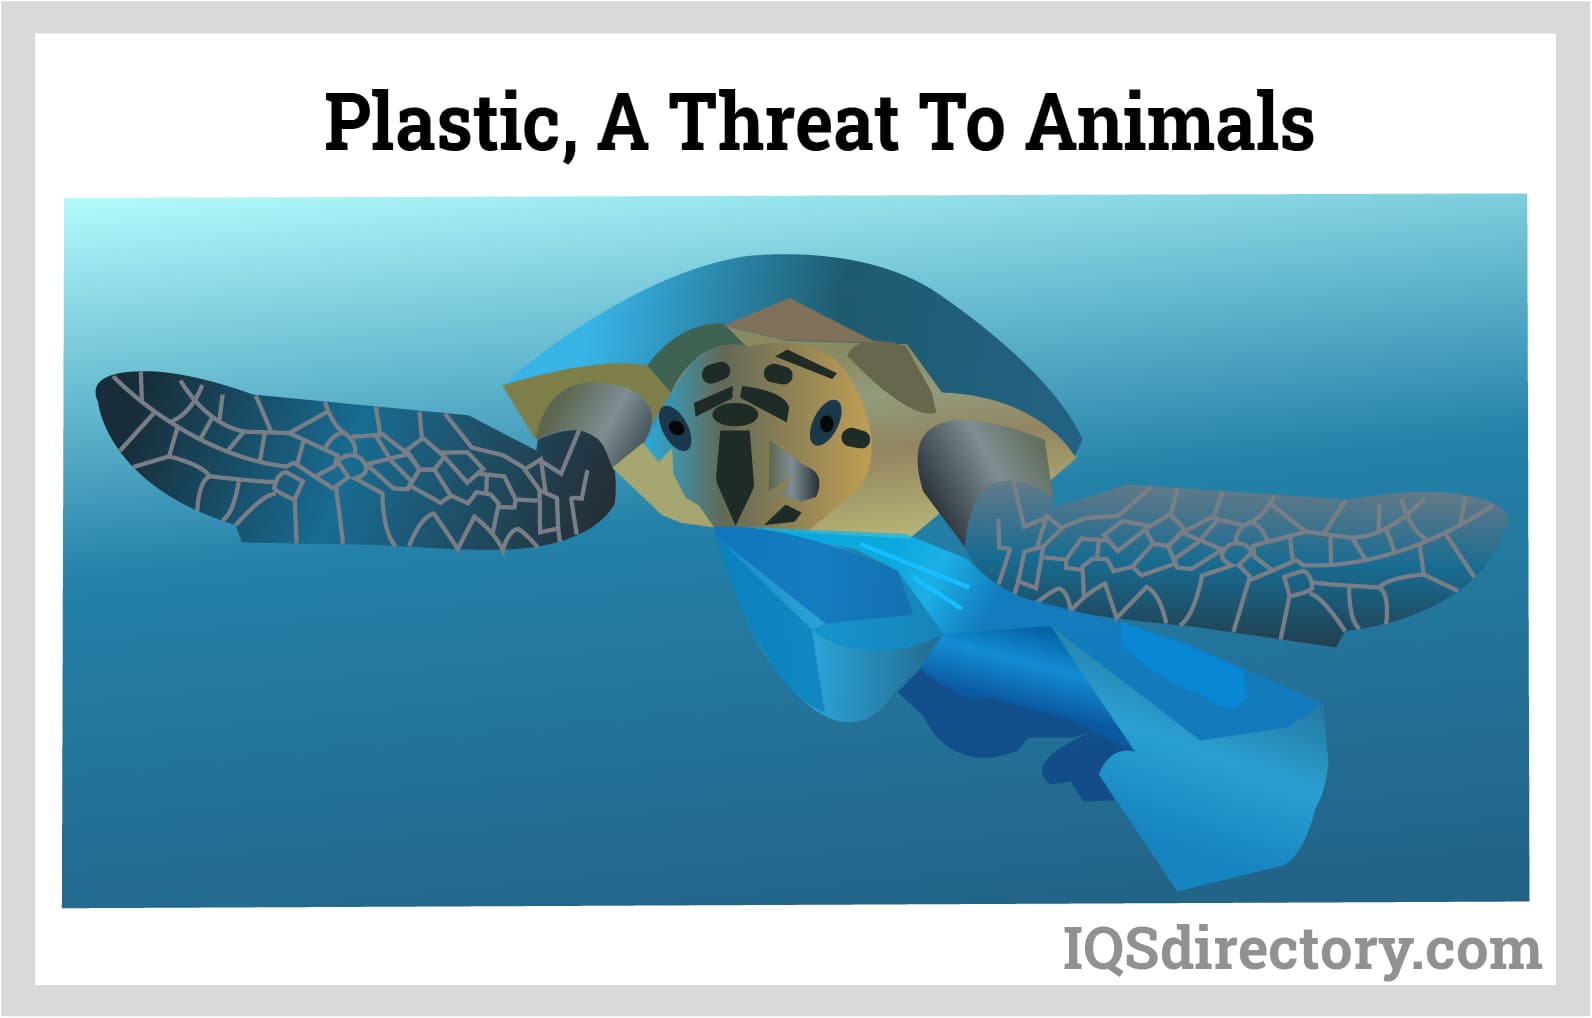 Plastic, A Threat to Animals